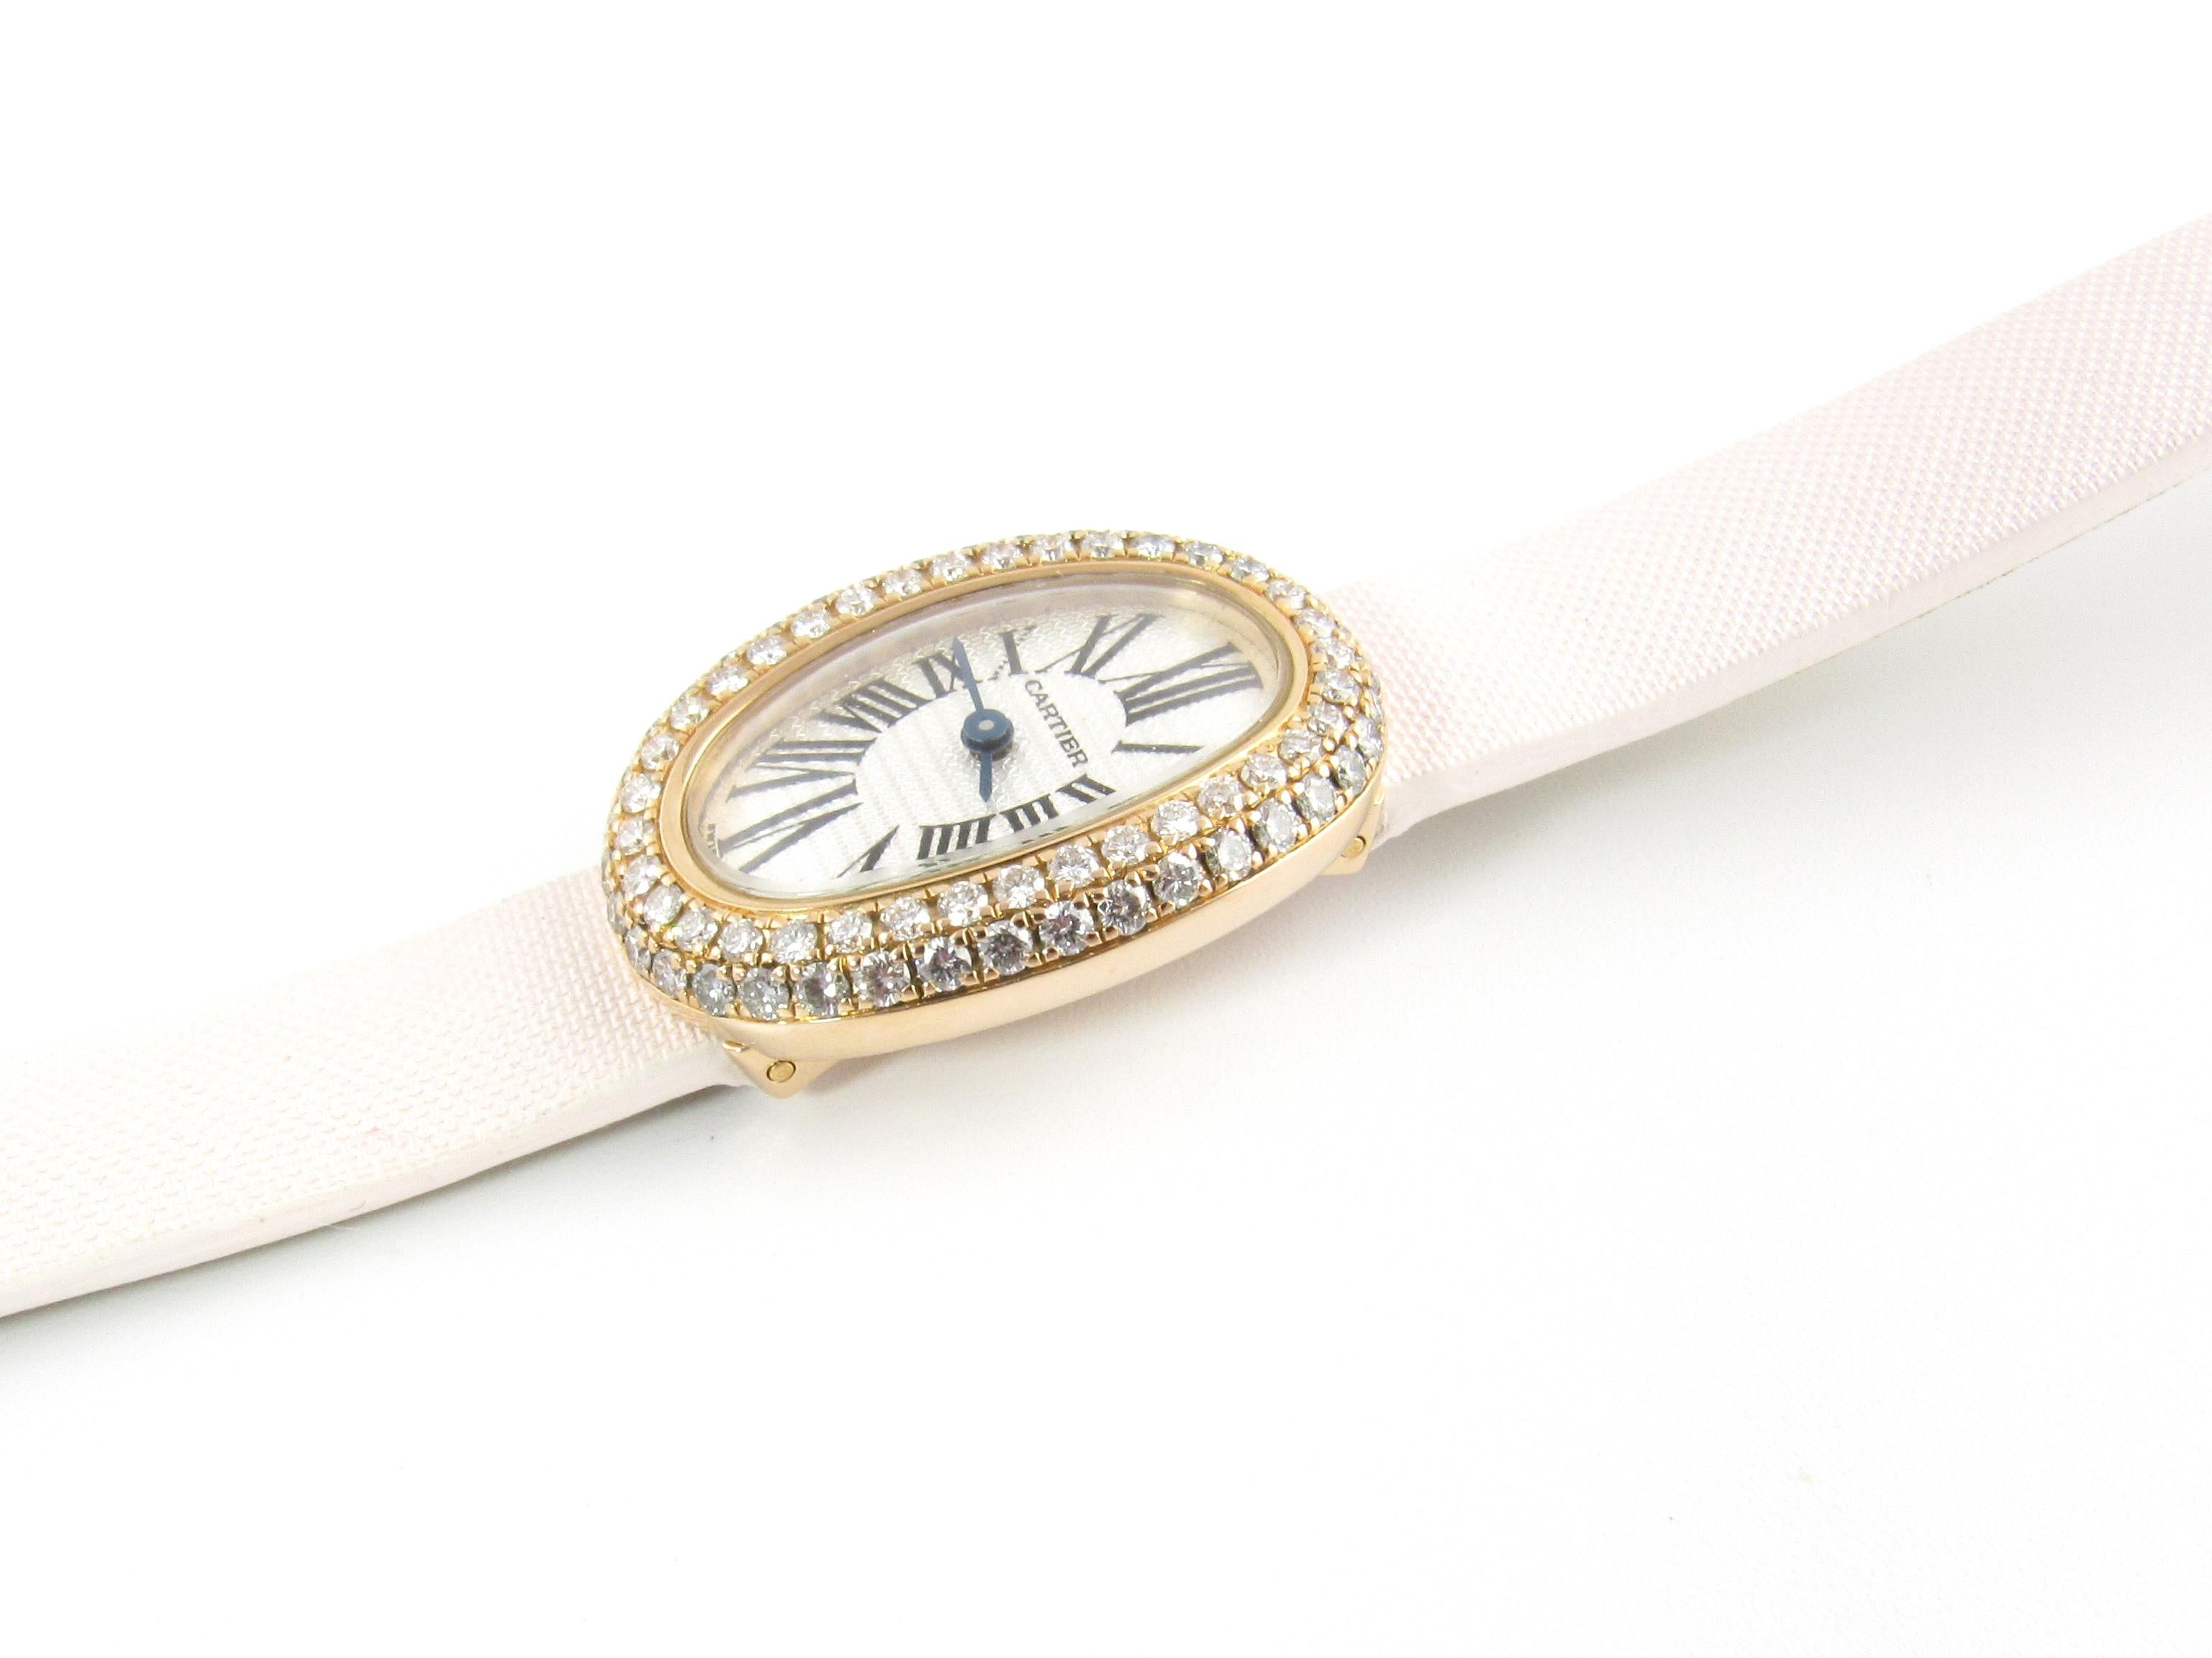 Taille ronde Cartier Baignoire Mini Diamond Montre Femme Or 18 Carats Ovale Bracelet Satin Rose